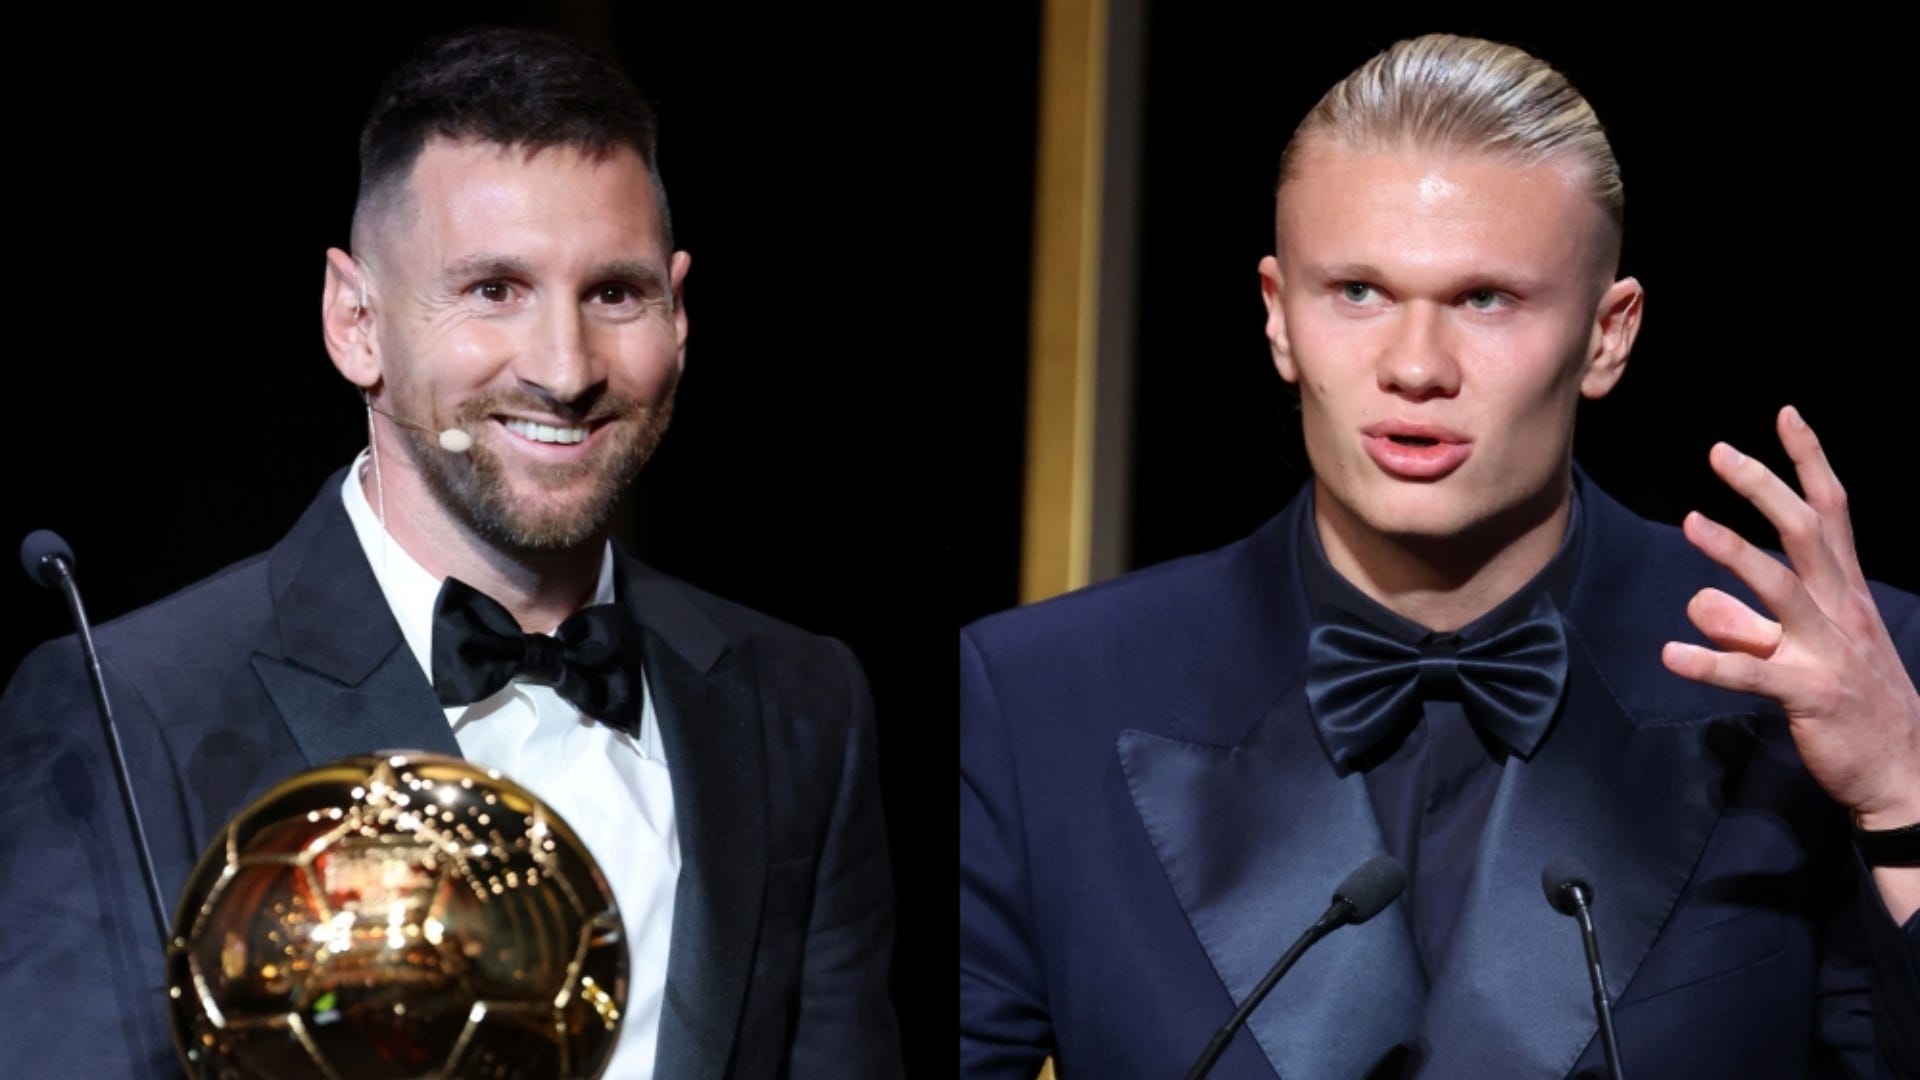 Lionel Messi's Ballon d'Or win is a token retirement gesture